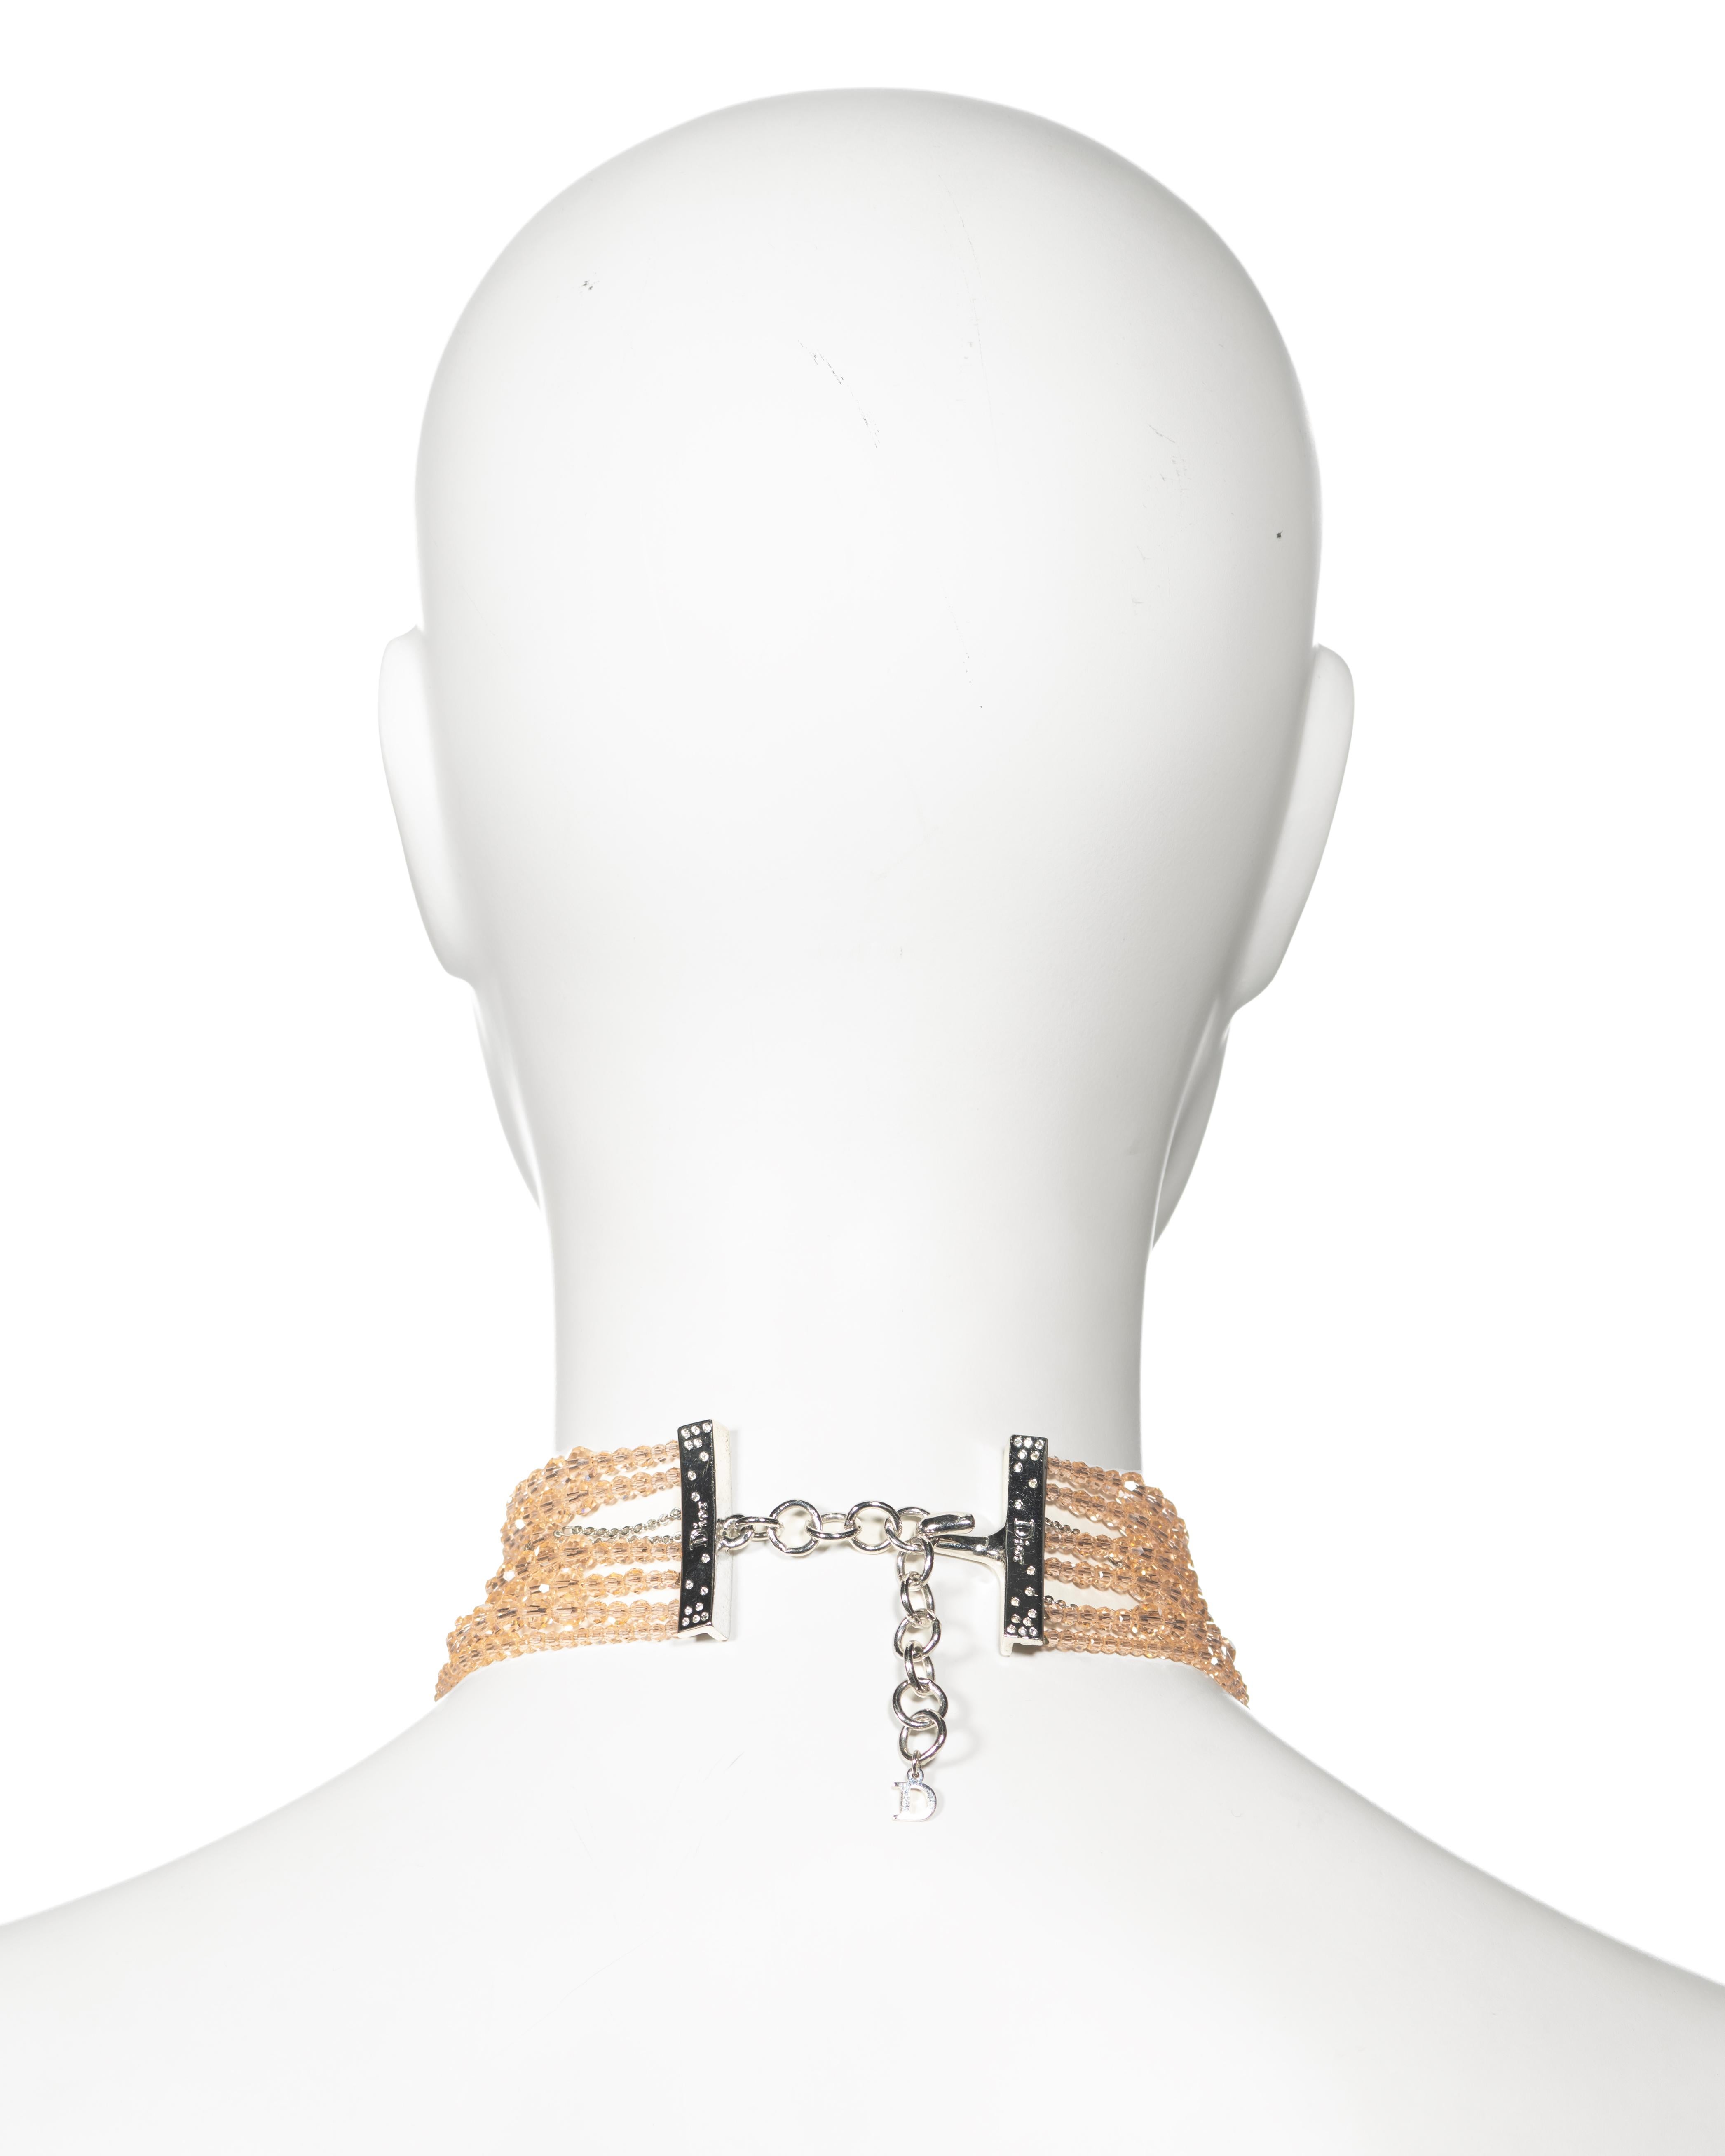 Christian Dior by John Galliano Distressed Peach Bead Choker Necklace, c. 2004 7